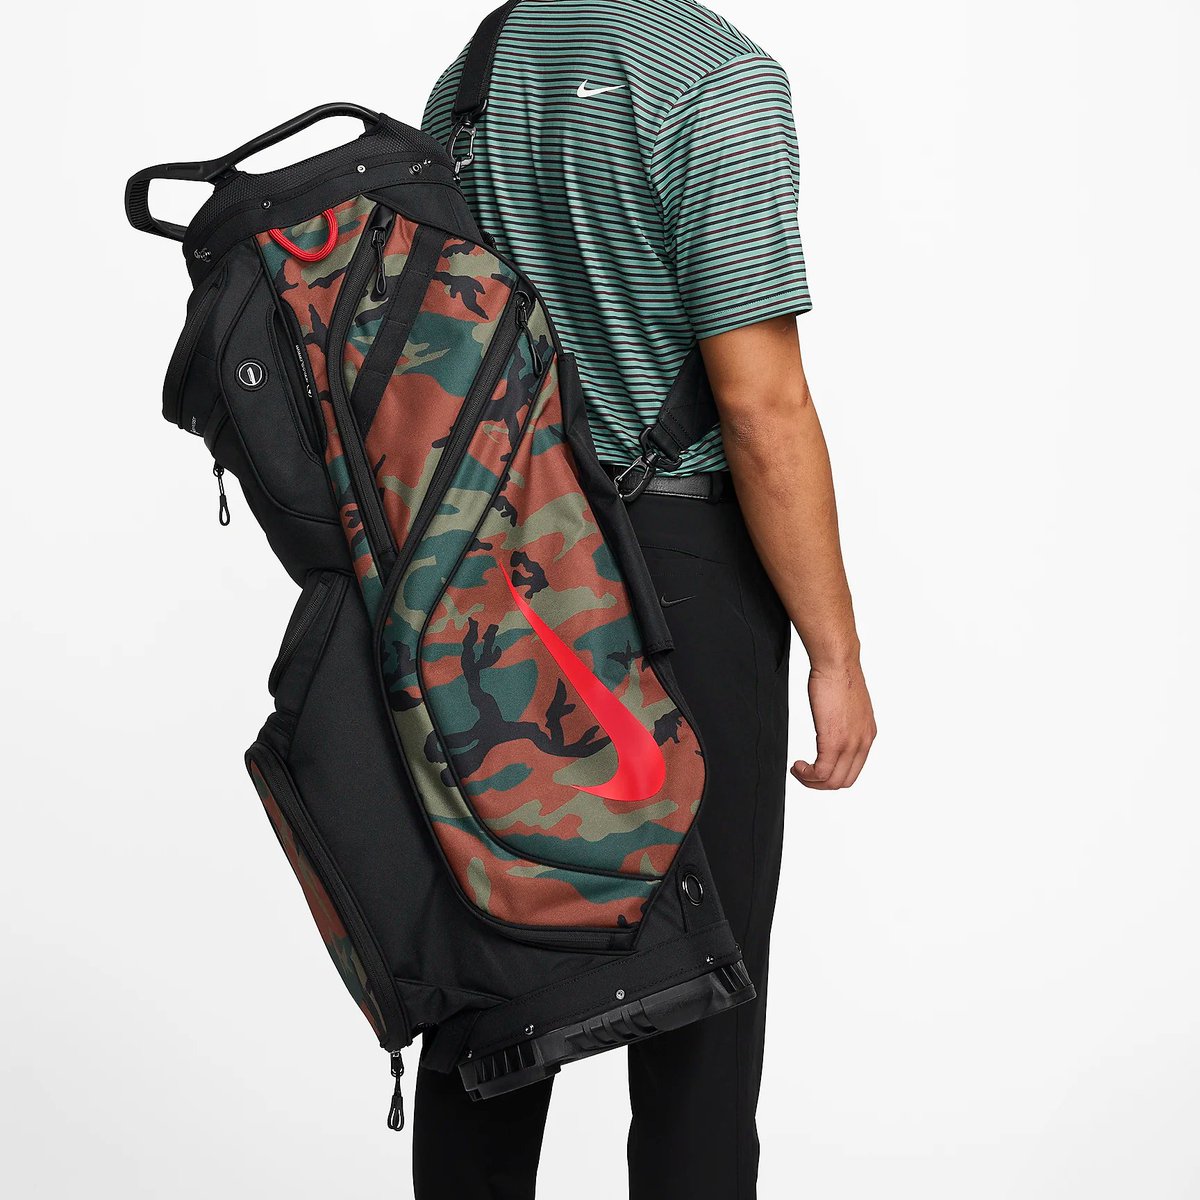 Ad: New - Nike Golf Bag 'Black/Camo Green'

-> howl.me/cl7r1snjUTR